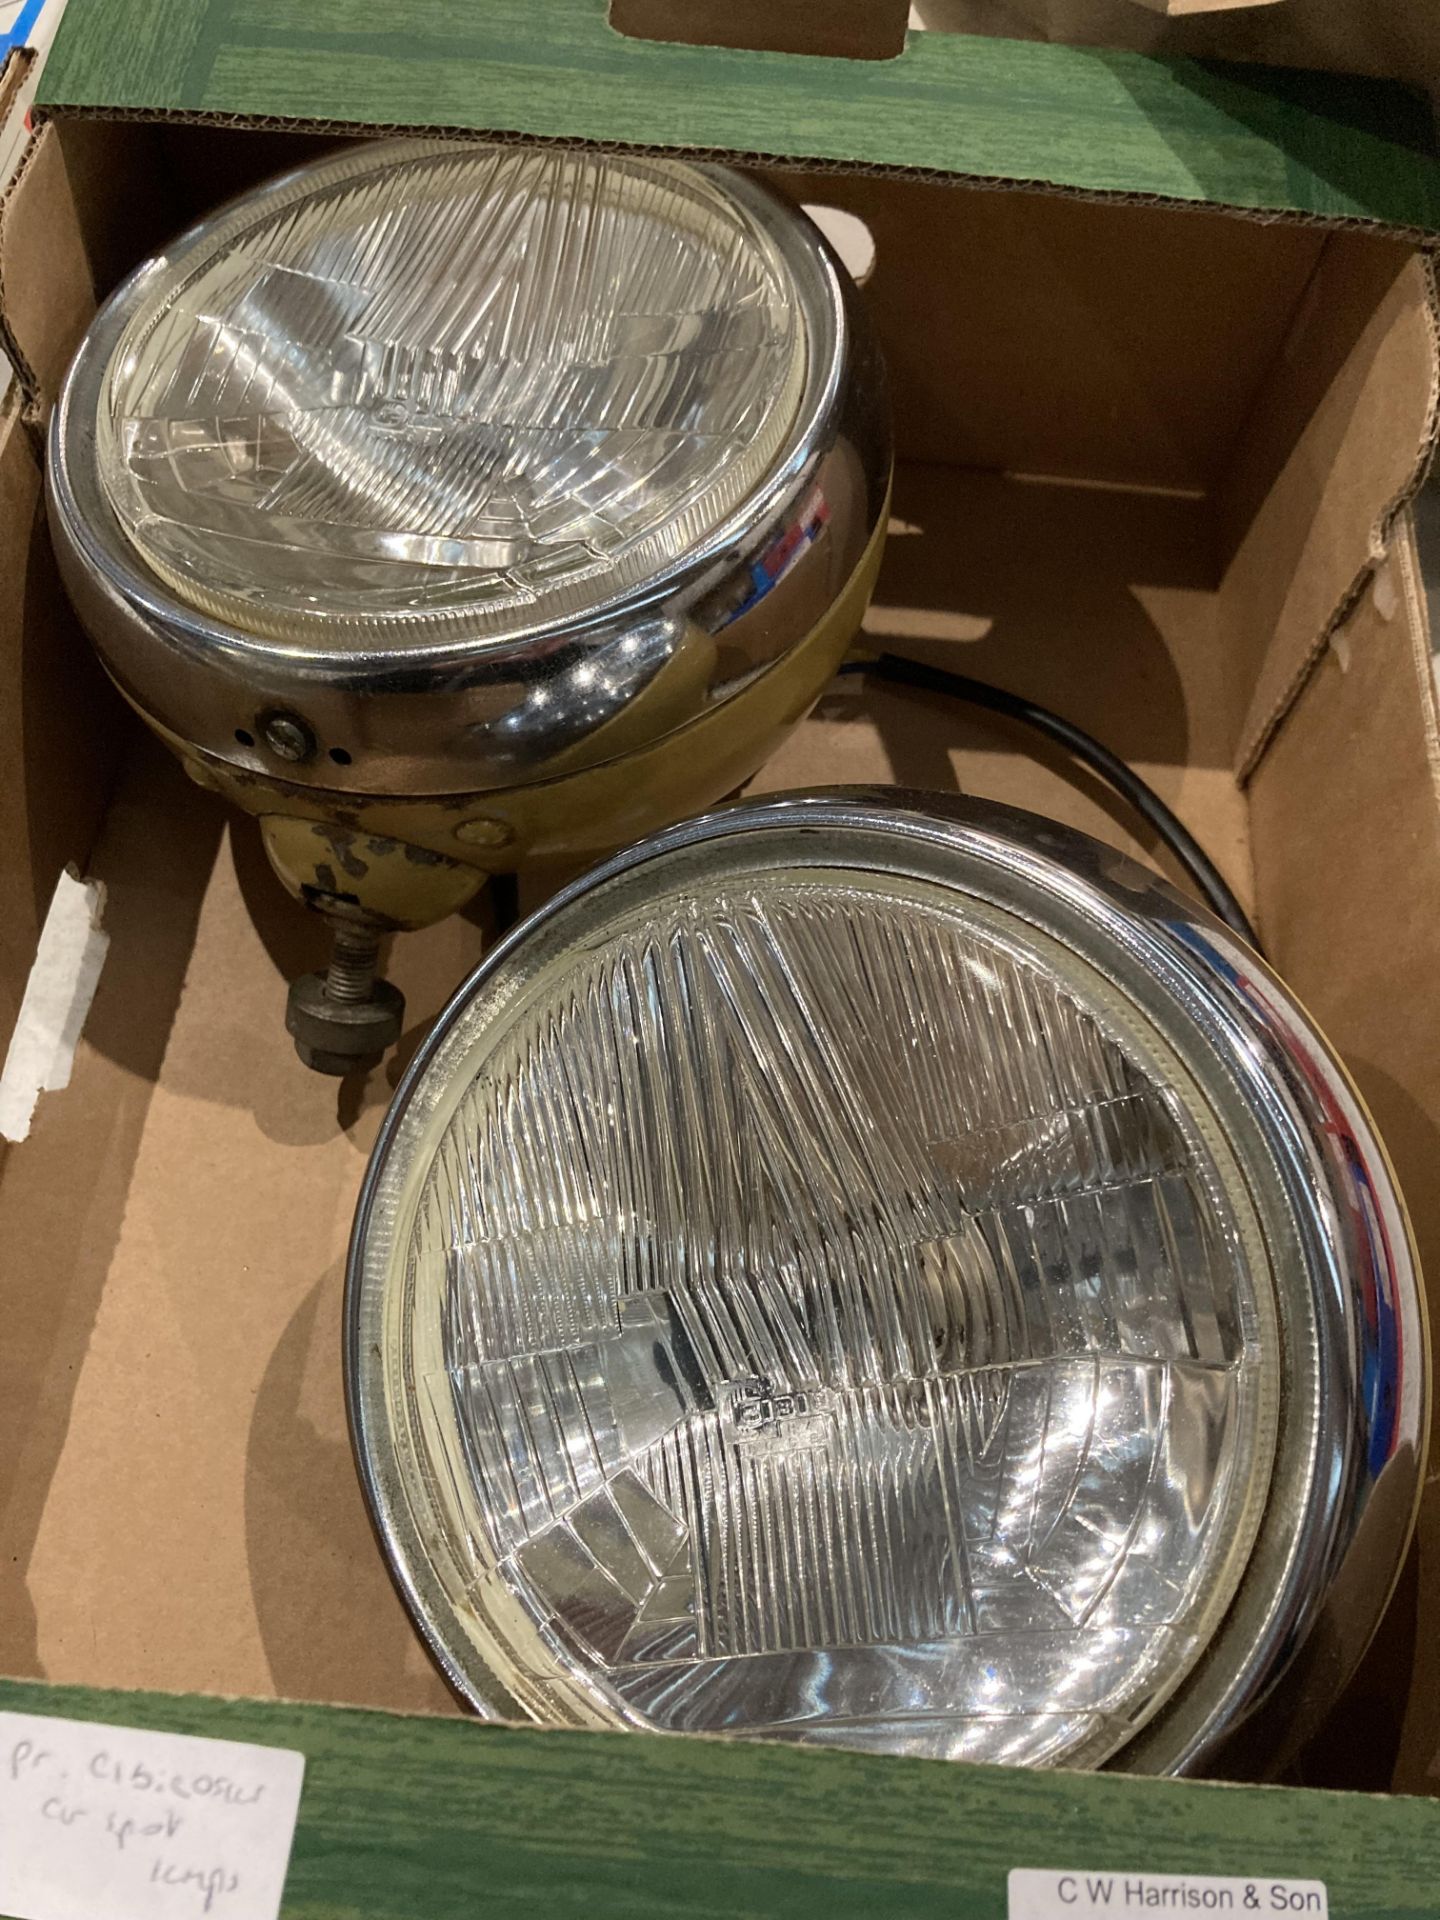 Pair of Cibie Car spot lamps (saleroom location: S3 T3)